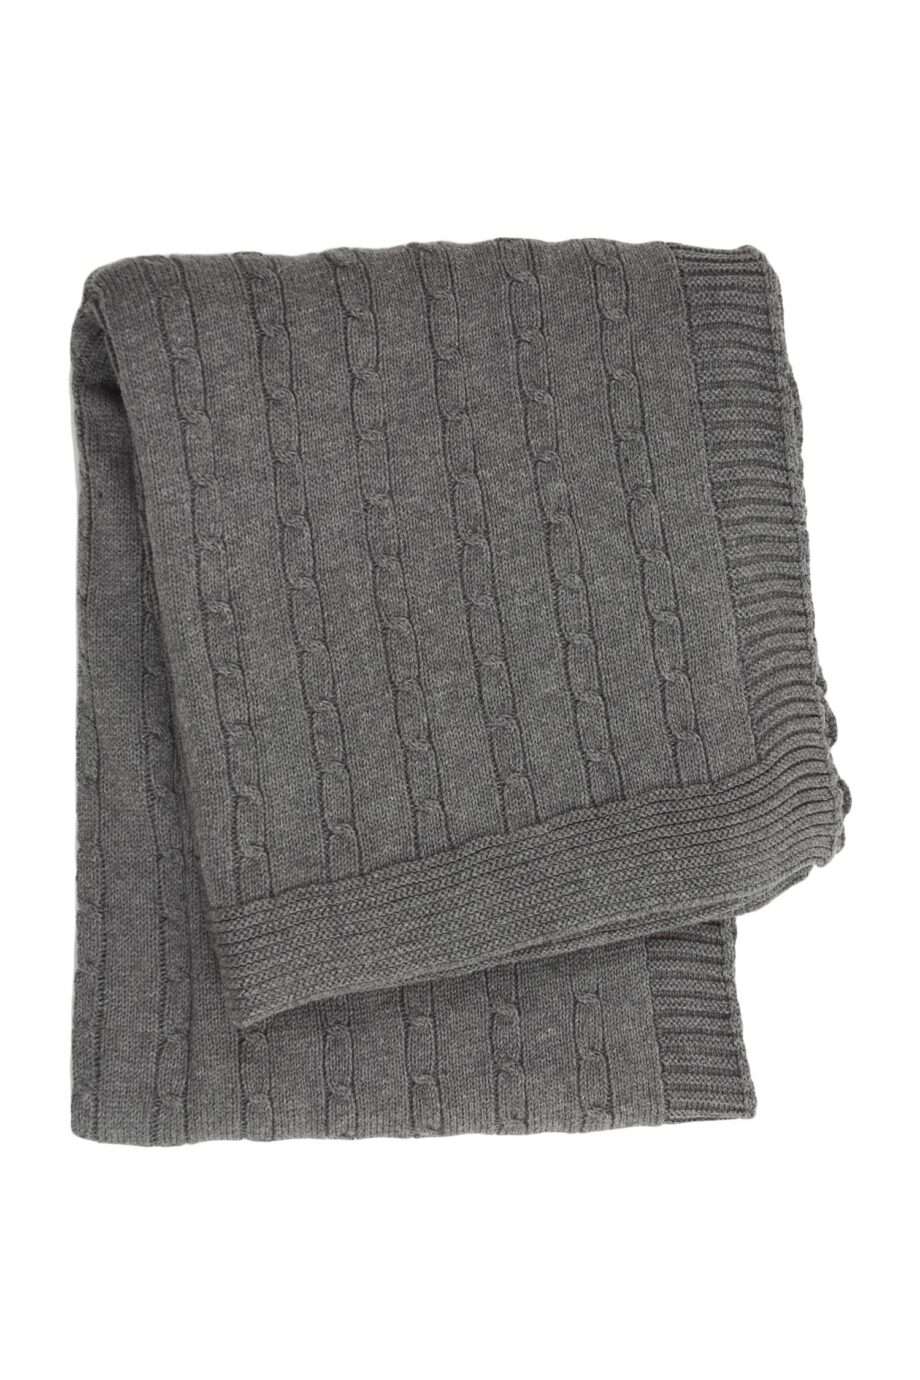 twist small grey knitted cotton little blanket medium